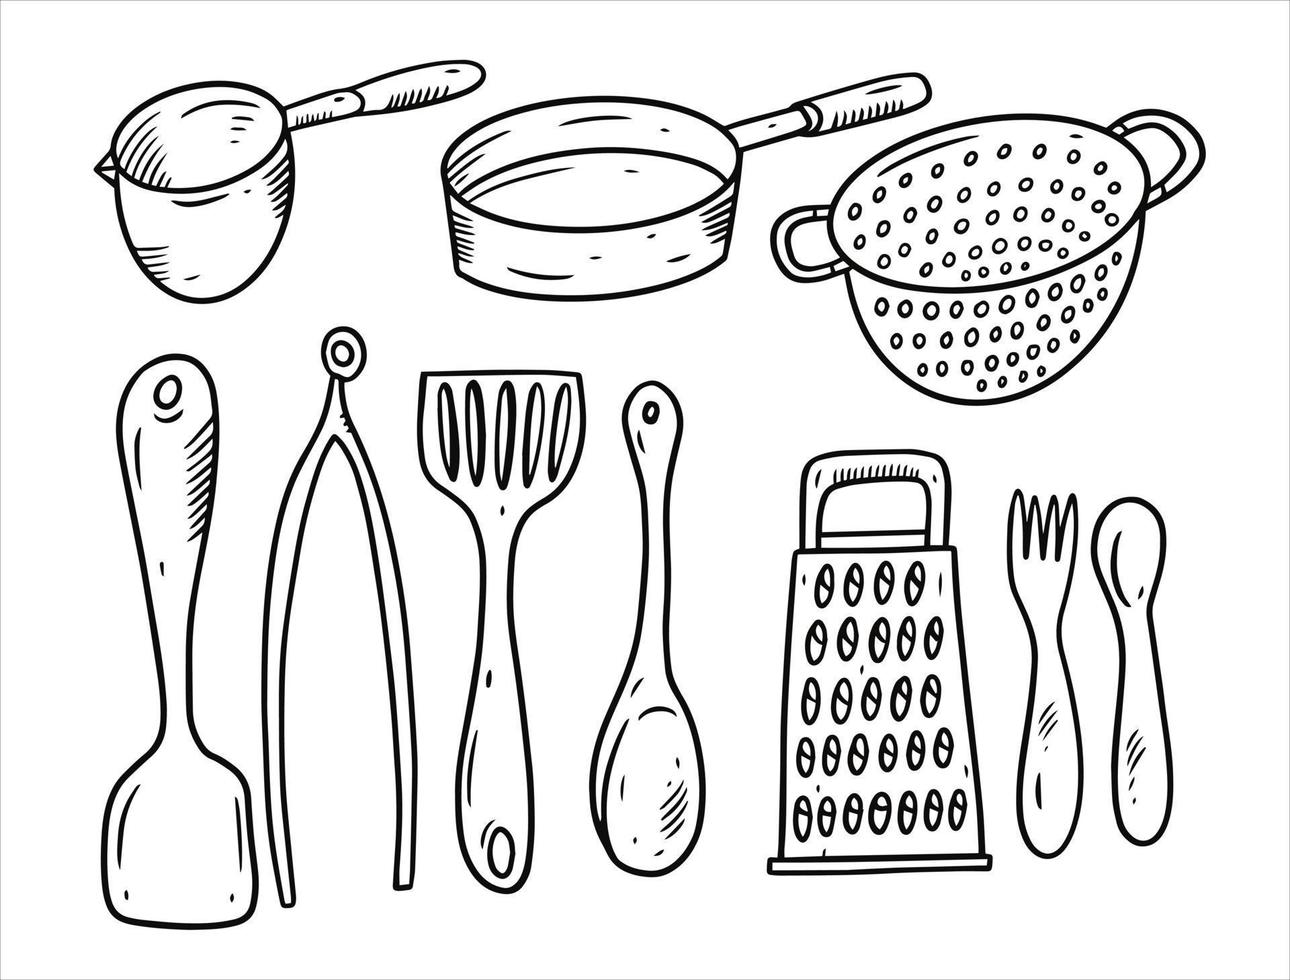 Kitchen appliances doodle set elements. Hand drawing sketch style. vector